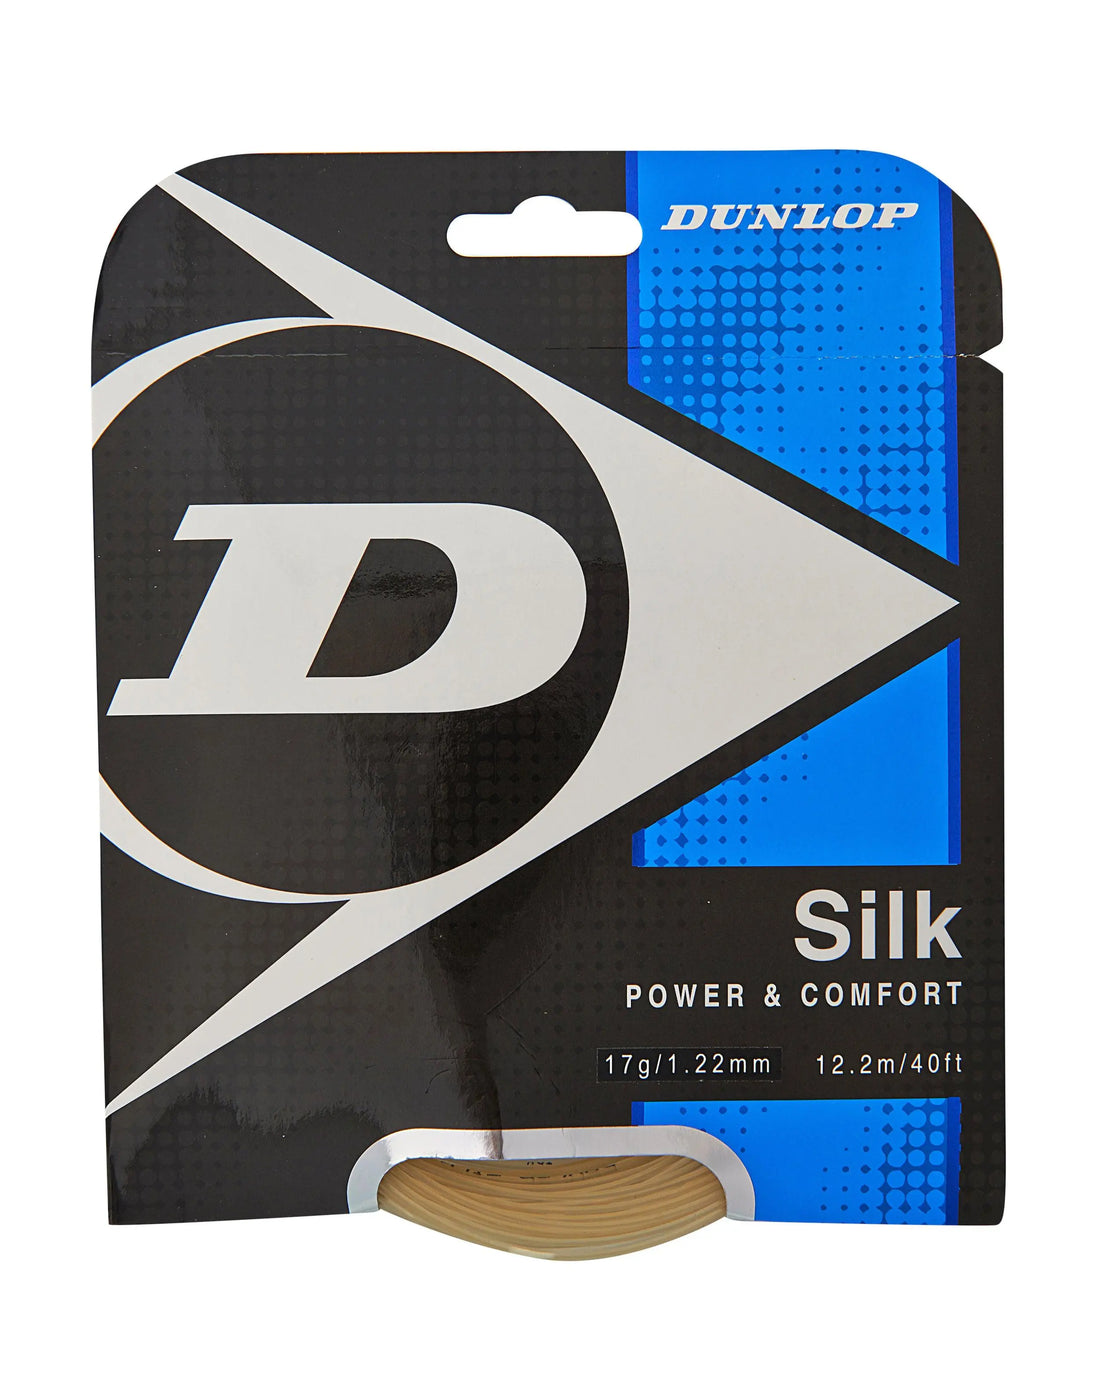 Dunlop Bdsp66 Silk Pro Reel 16g